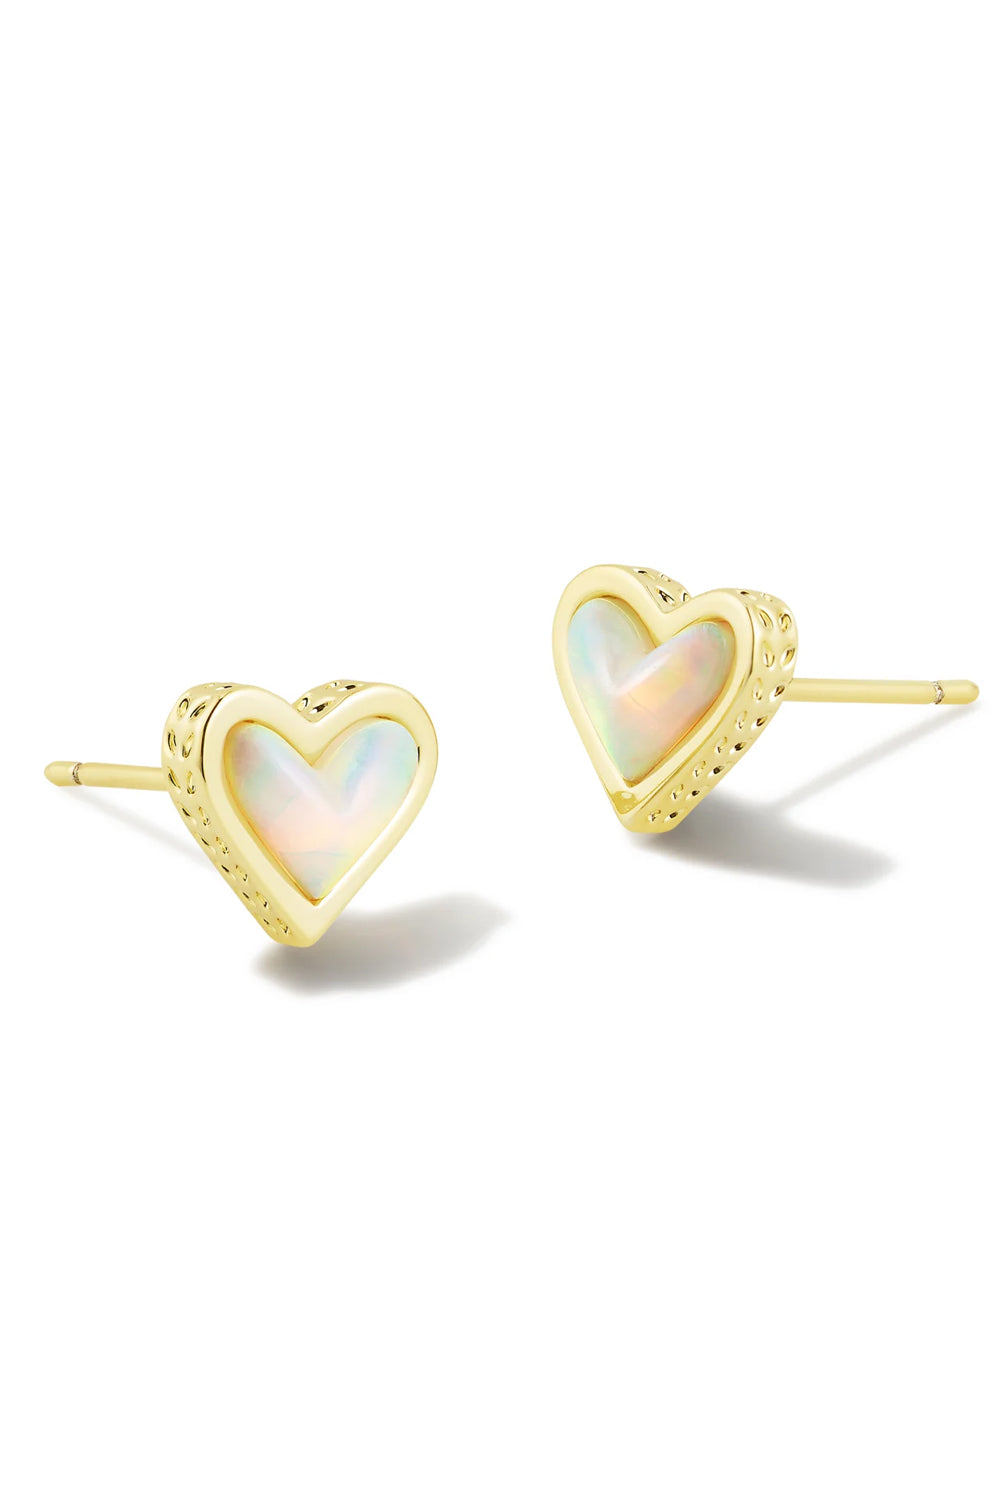 Kendra Scott: Framed Ari Heart Earrings - White Opalescent | Makk Fashions